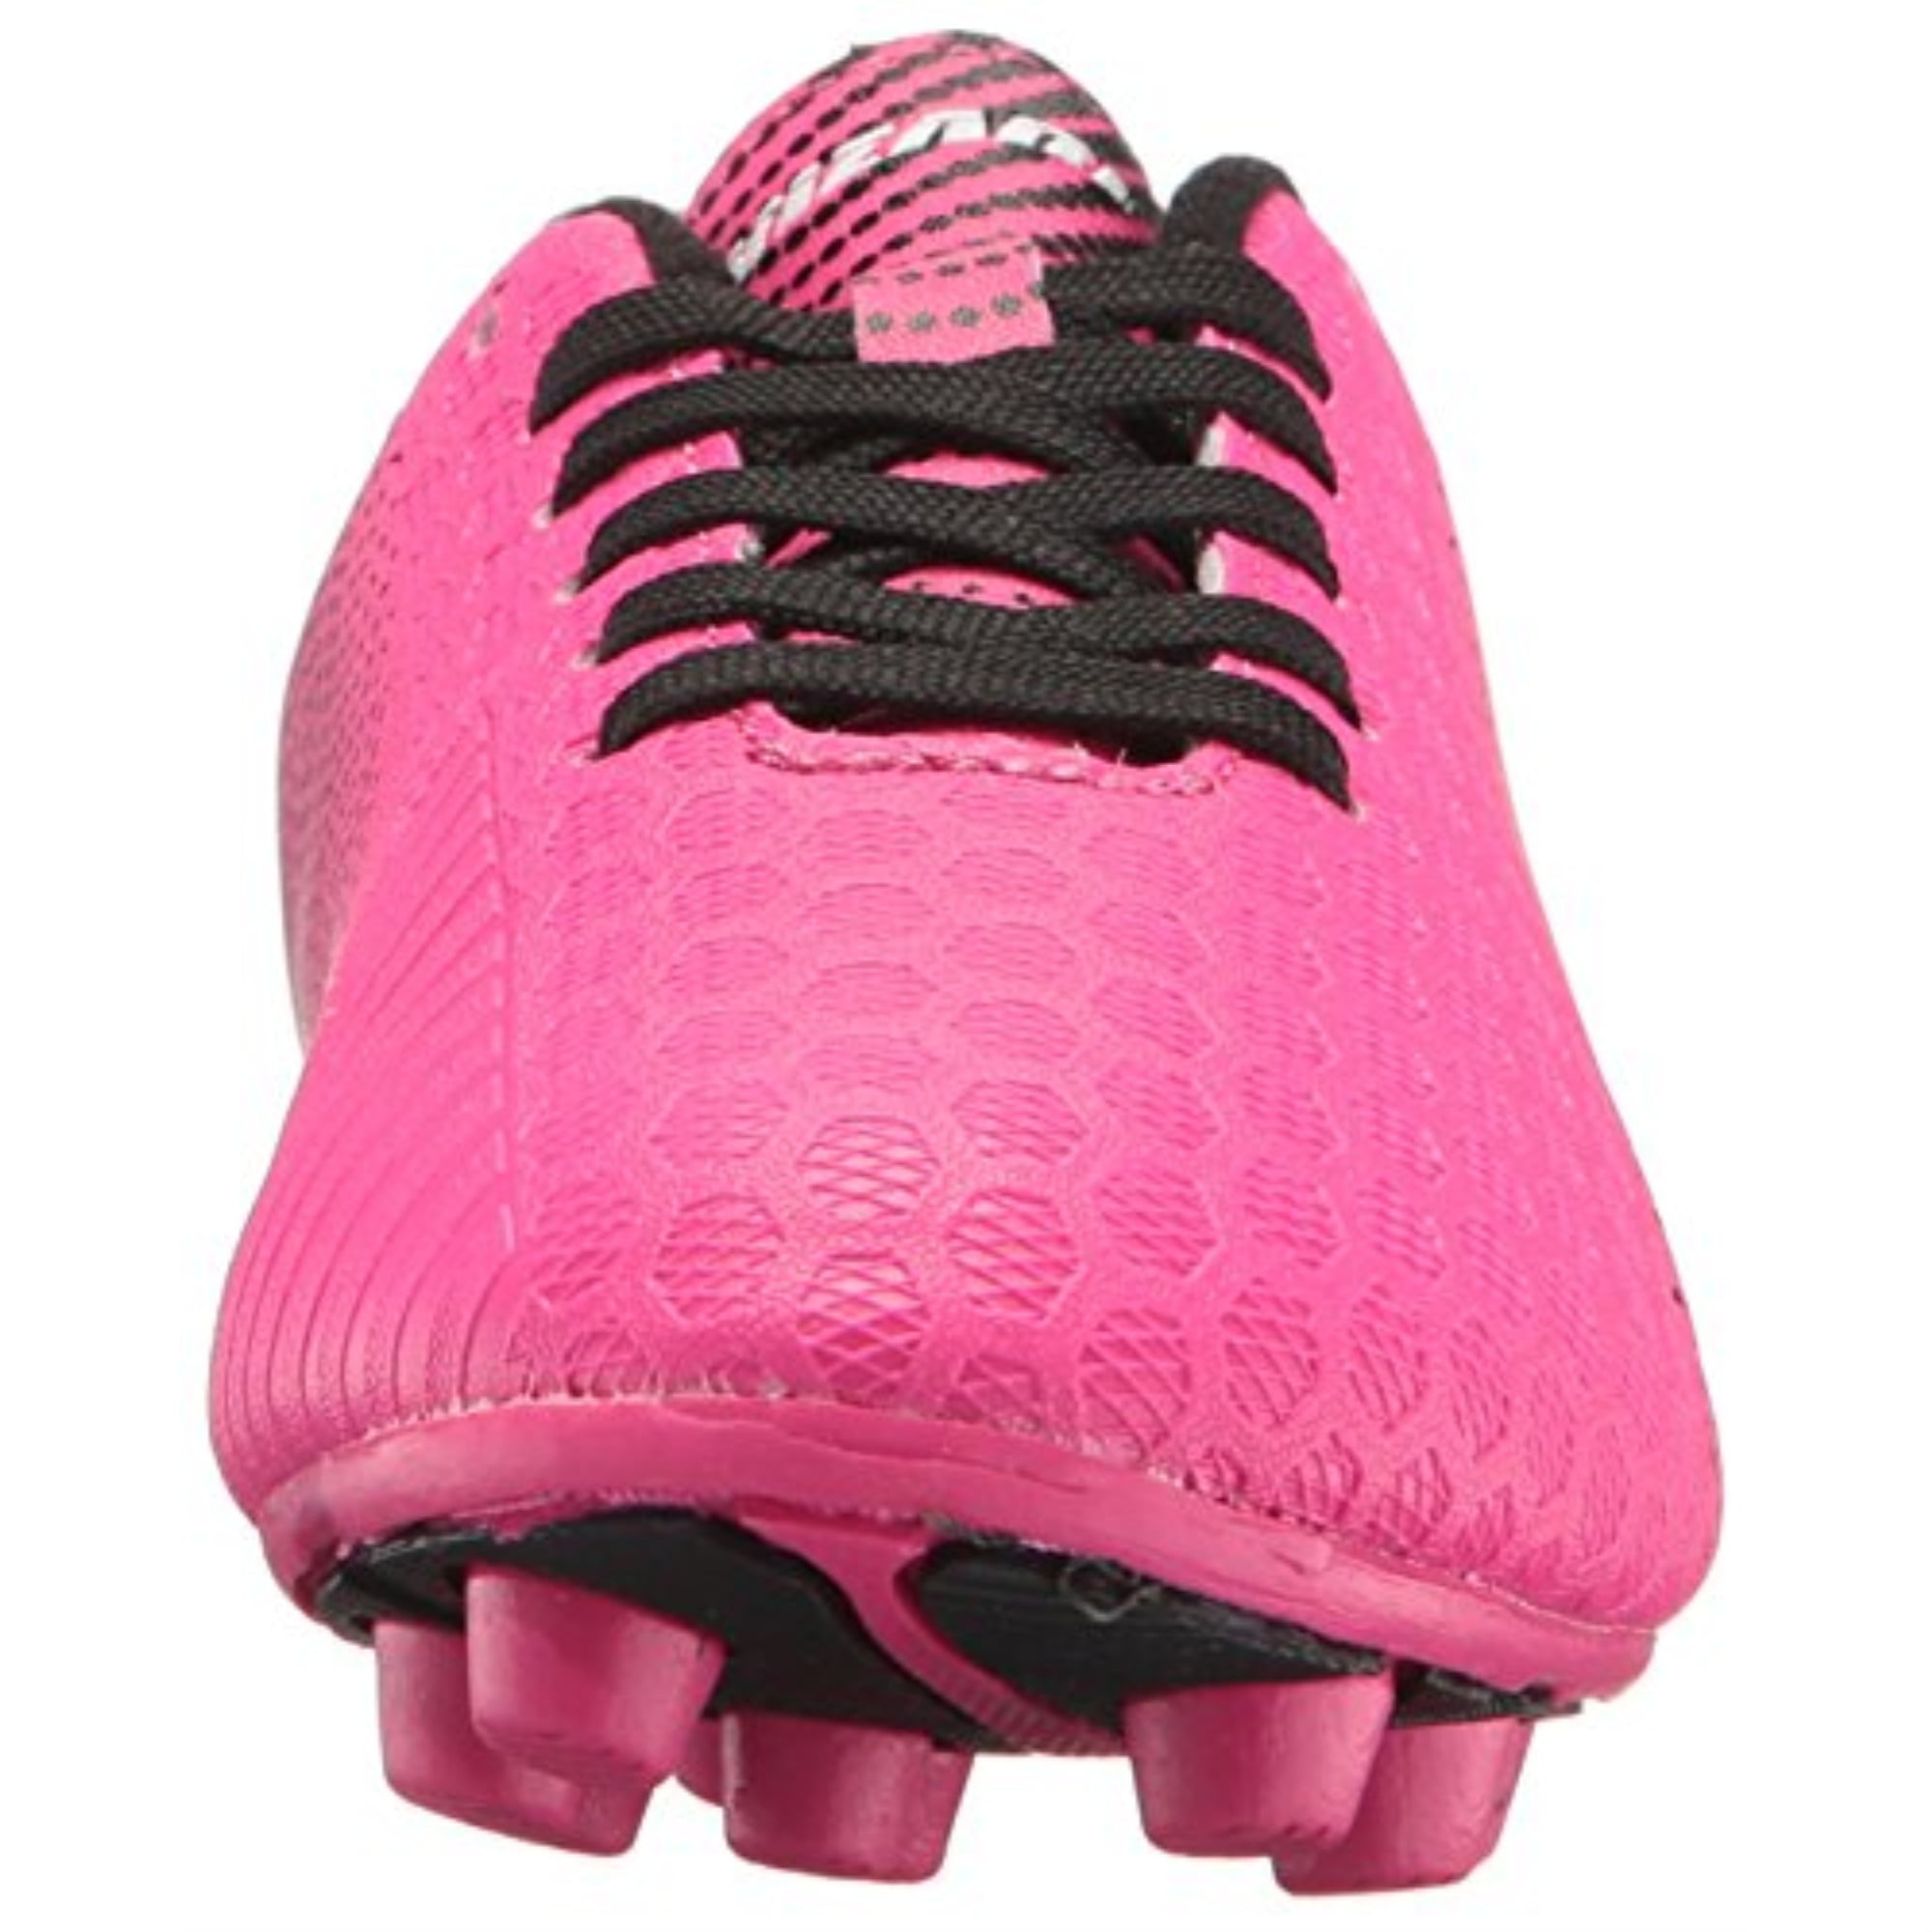 Vizari Unisex-Kid's Stealth FG Soccer Shoe